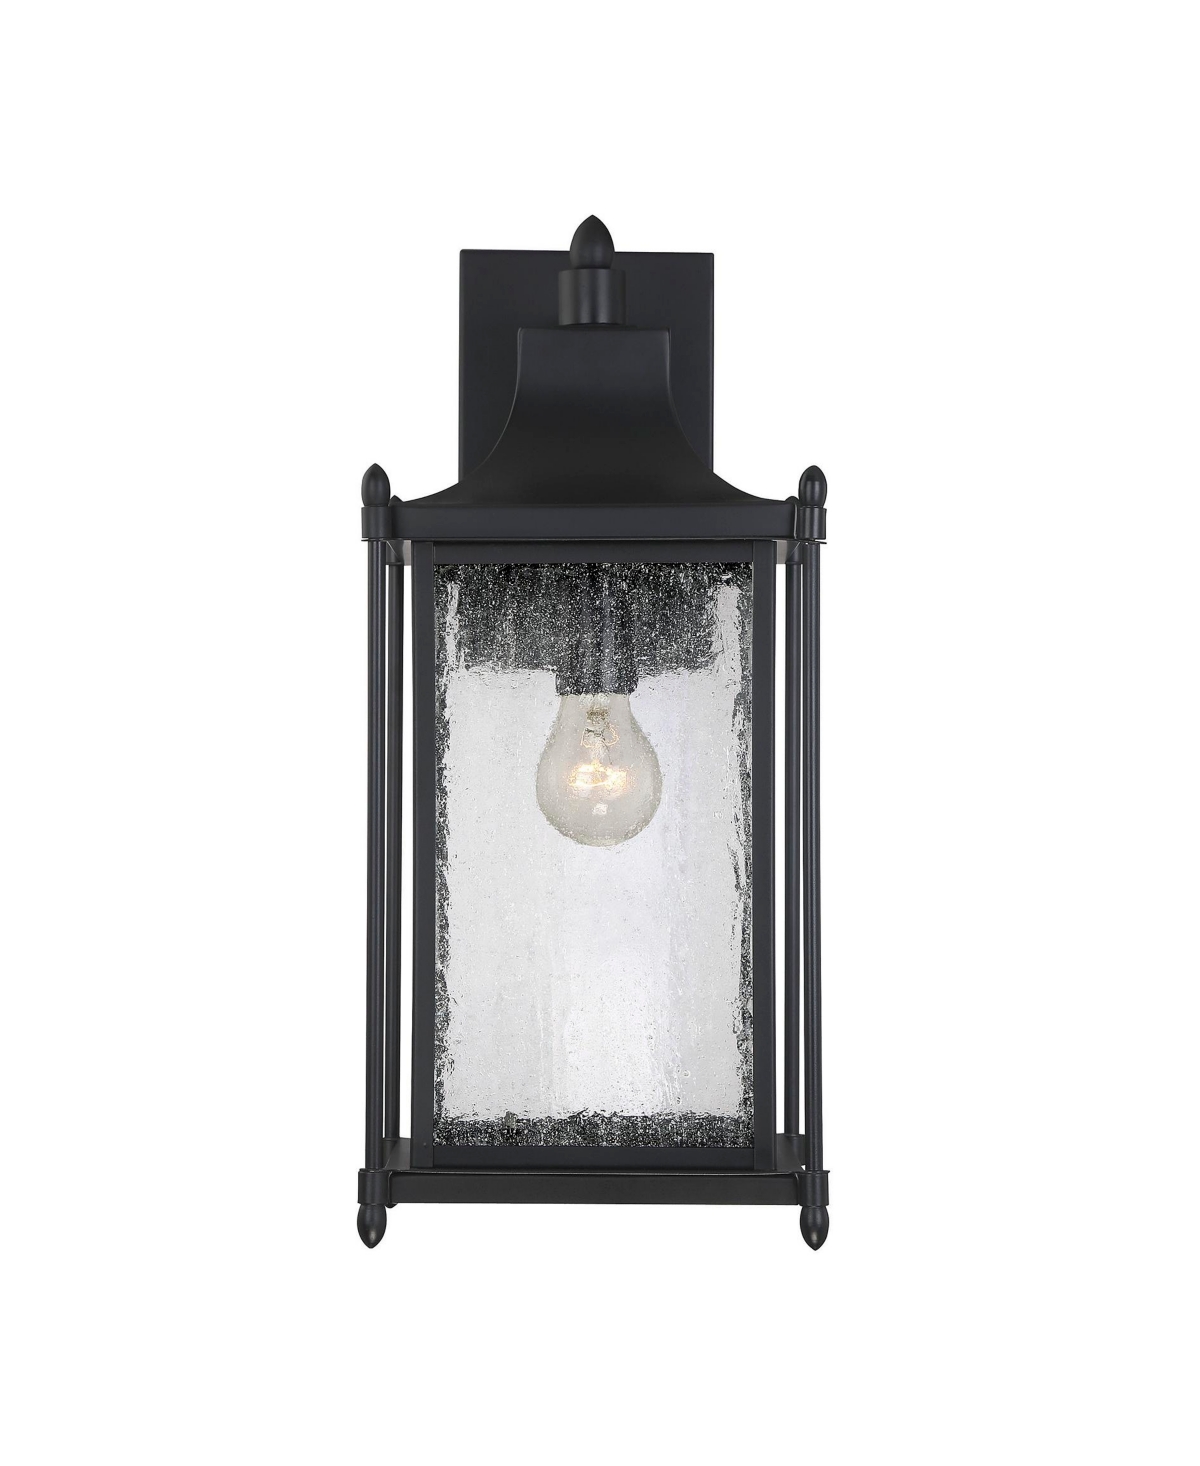 Dunnmore 1-Light Outdoor Wall Lantern in Black - Black